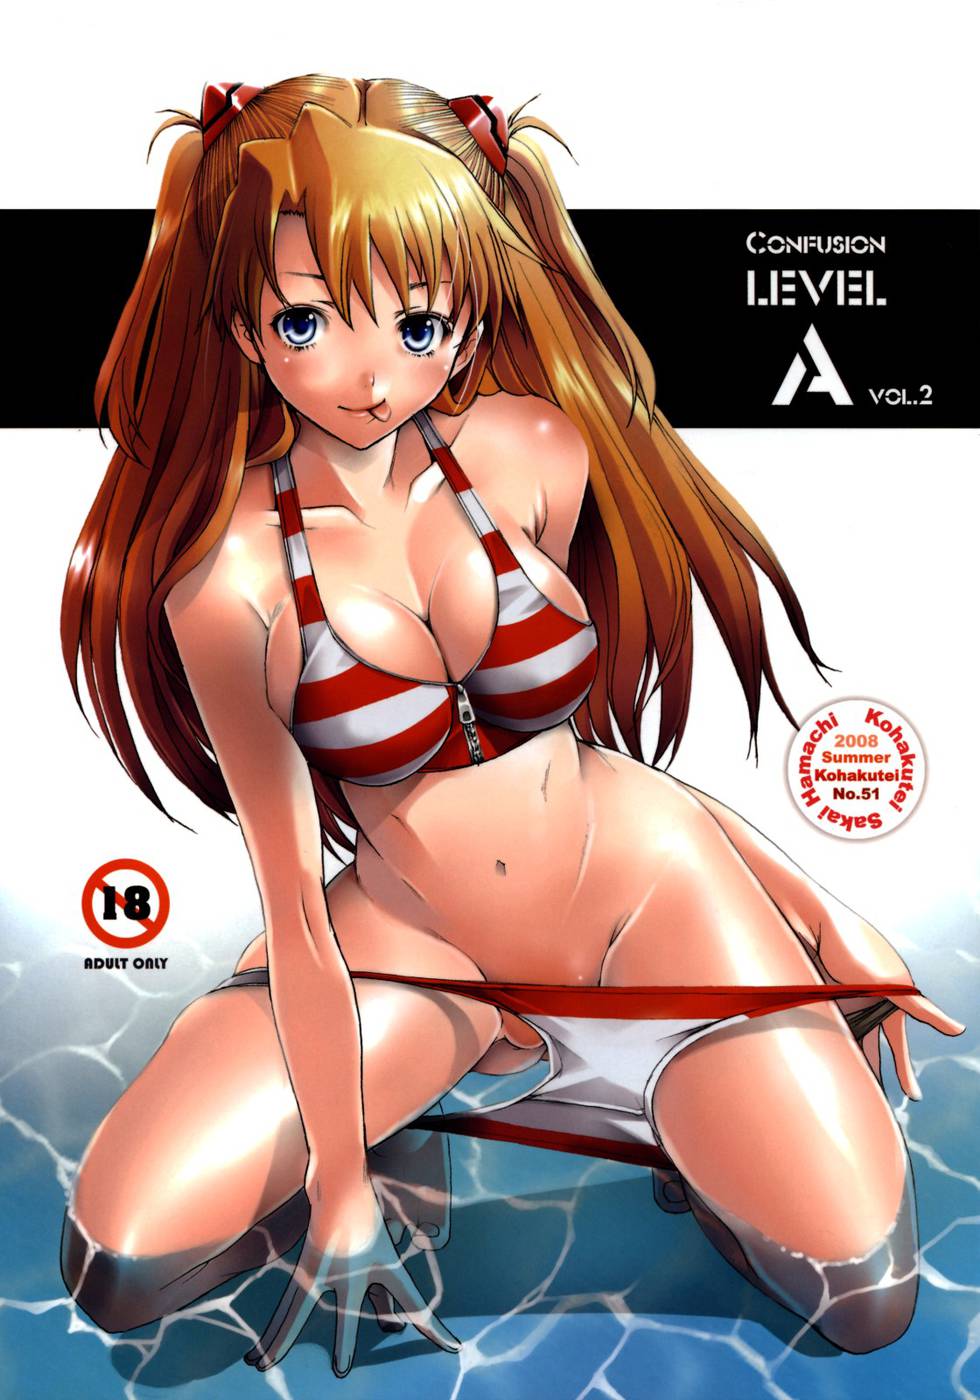 Hentai Manga Comic-v22m-Confusion Level A-Chap2-1